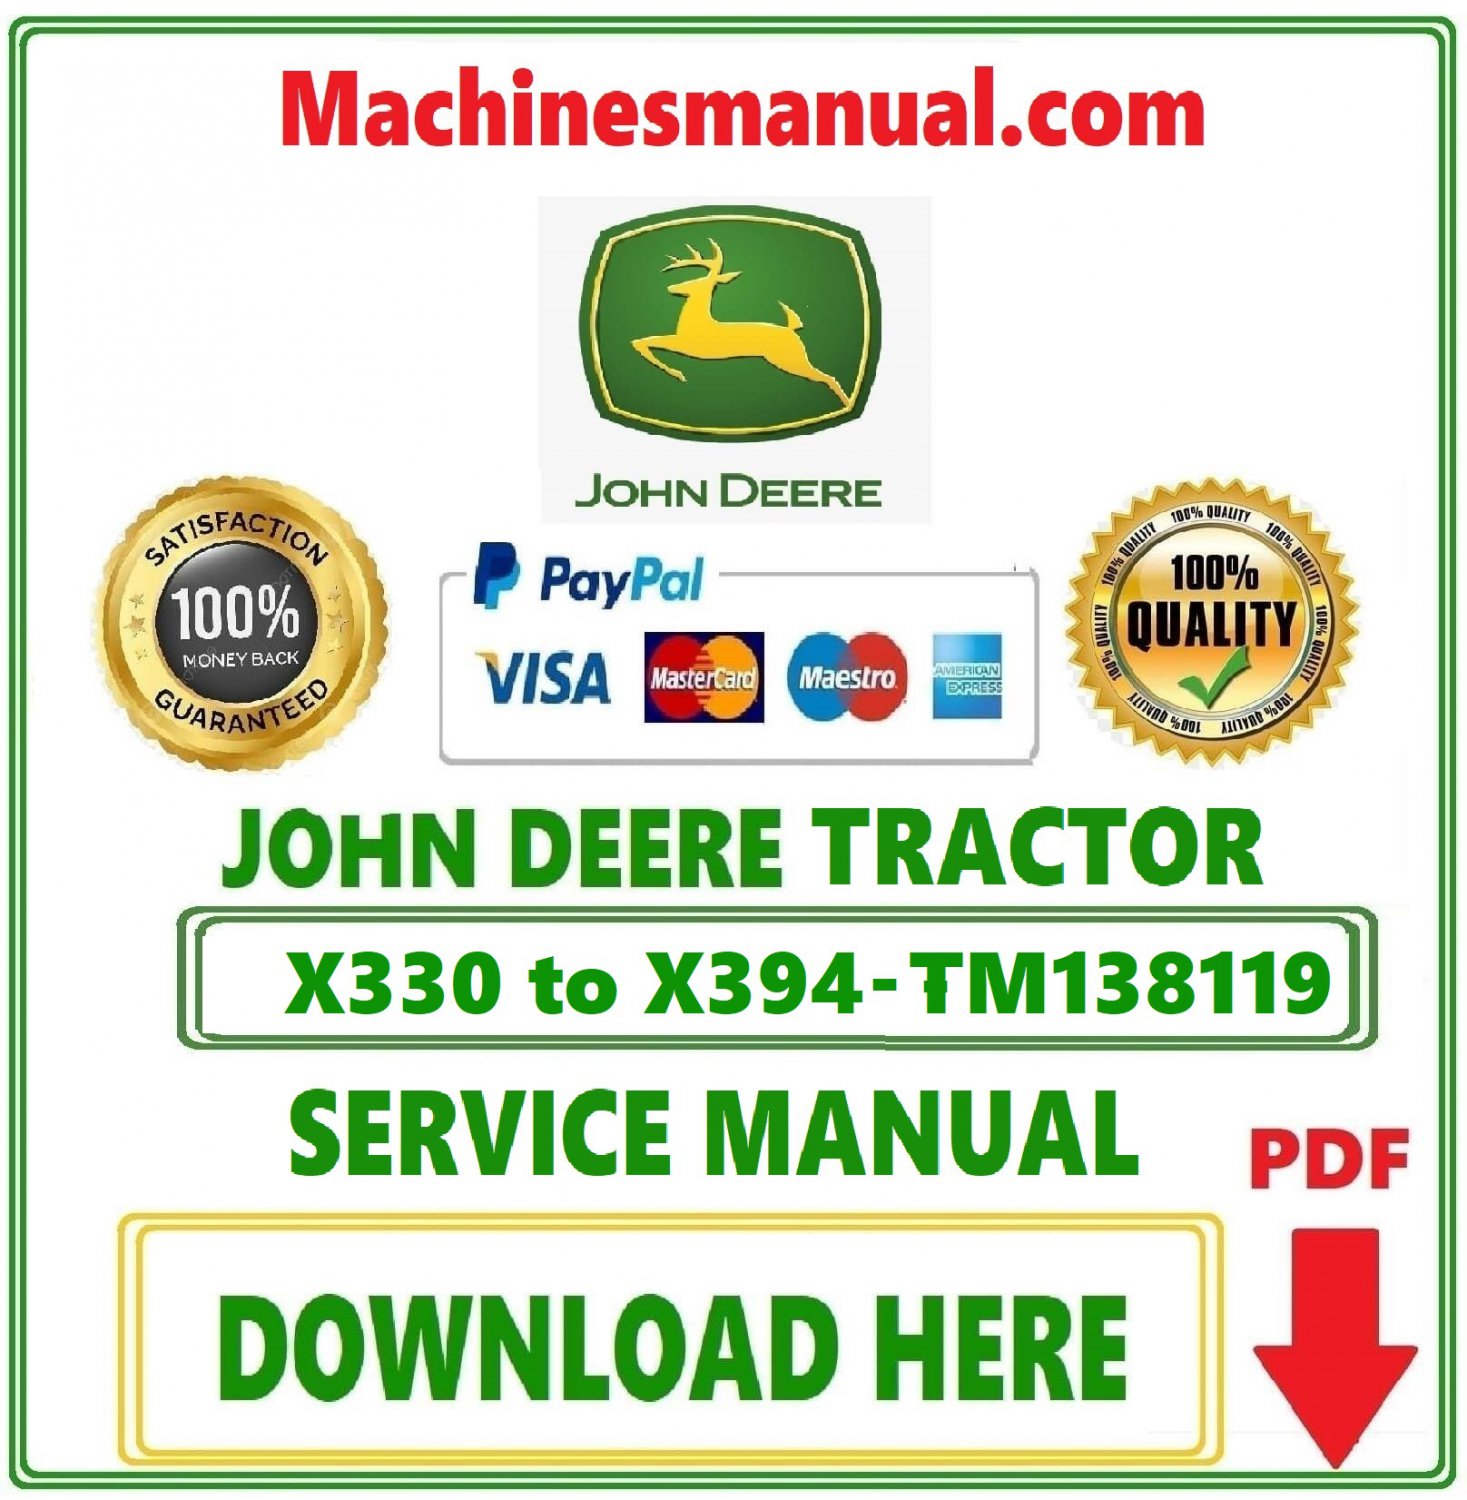 John Deere X330 to X394 Riding Lawn Tractor Technical Service Repair Manual Download Pdf-TM138119